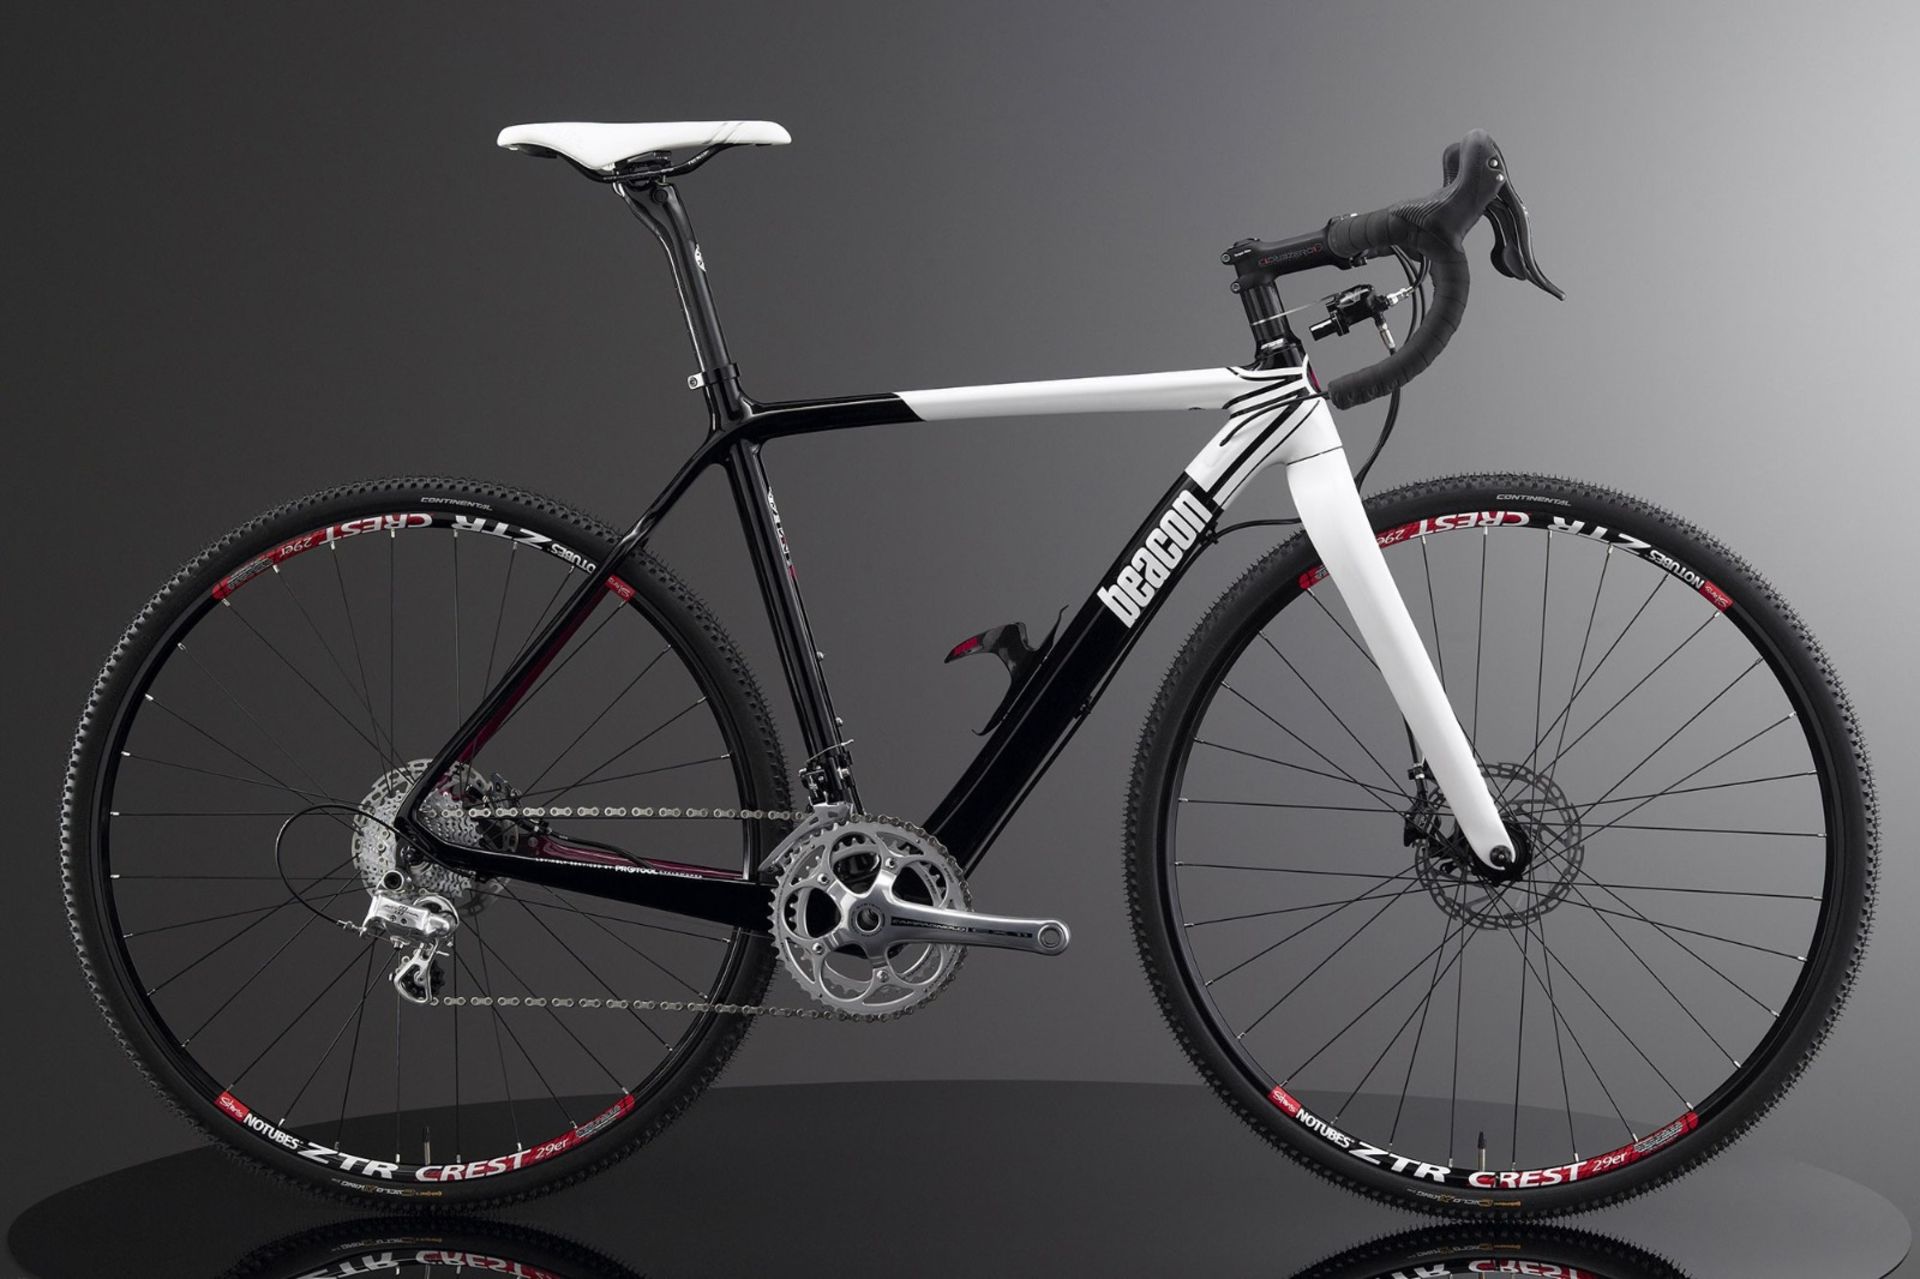 1 x Beacon Model BF-45, Size 540, Carbon Fibre Bike Frame in Black & White. - Image 2 of 3